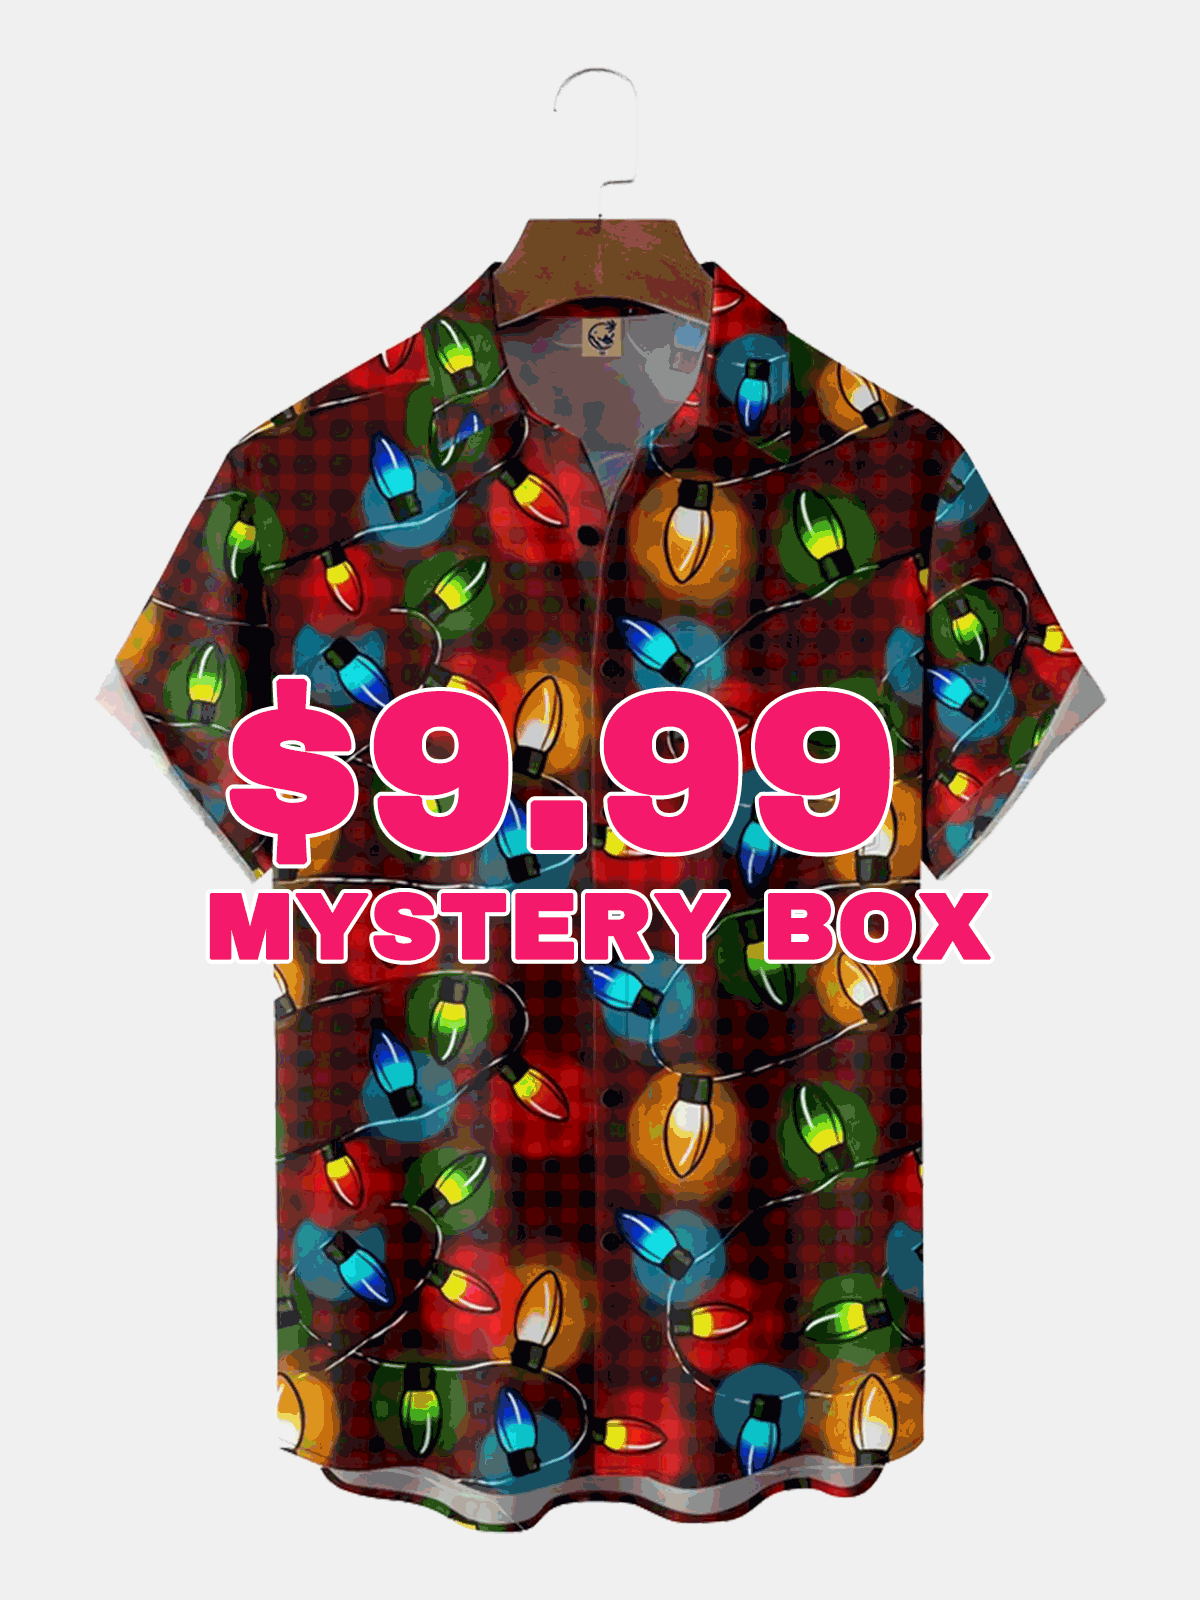 MYSTERY BOX $9.99